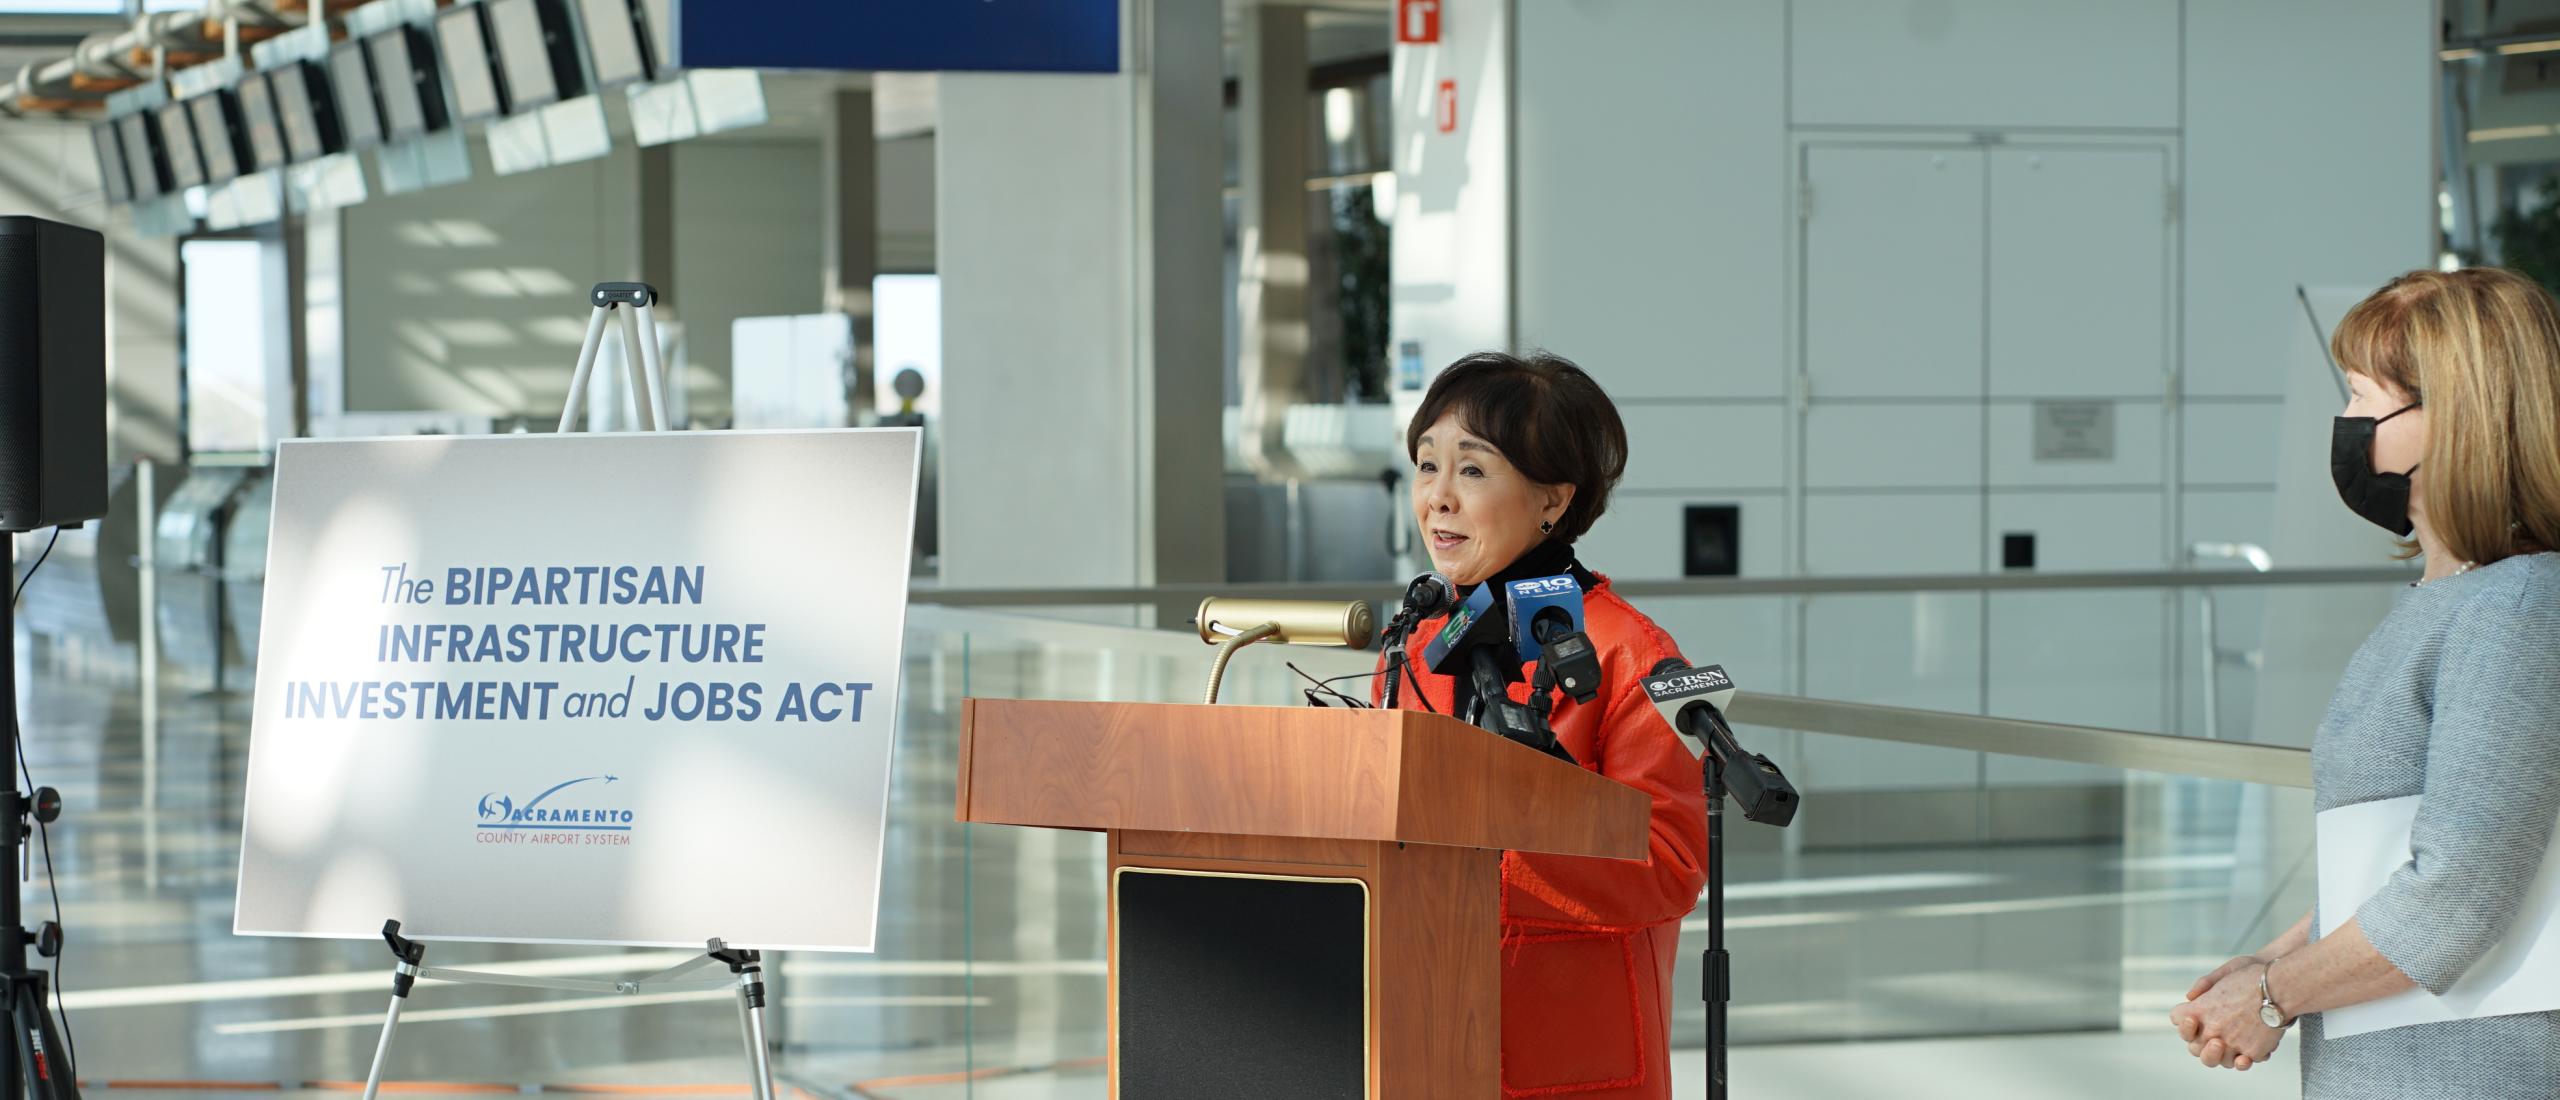 Congresswoman Matsui speaking at a podium inside of an airport.